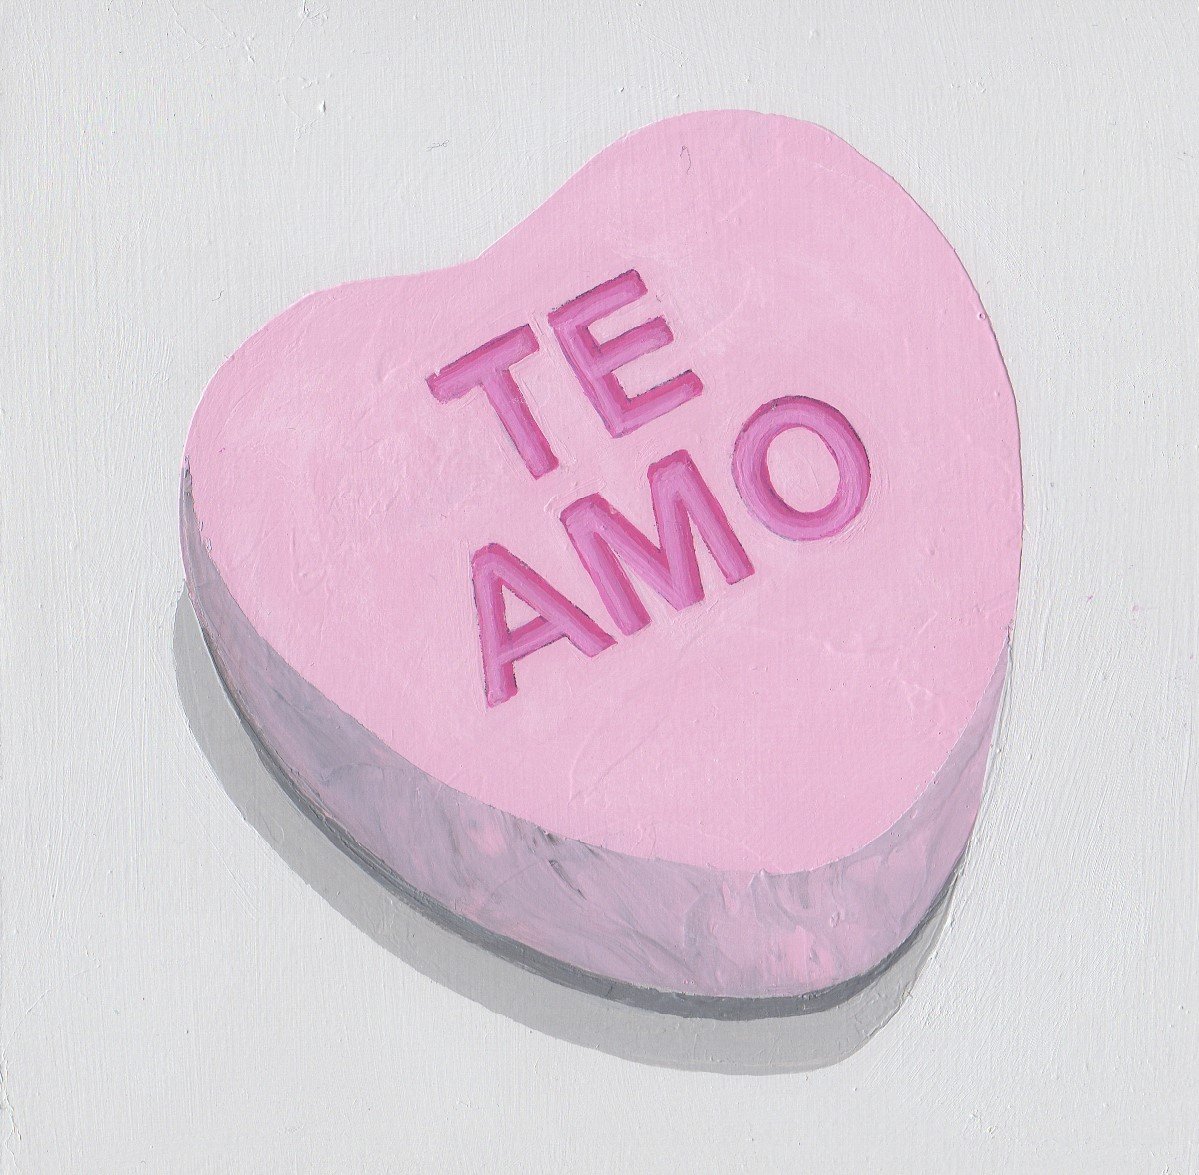 Conversation Heart Single TE AMO pink by Nicci SevierVuyk.jpg